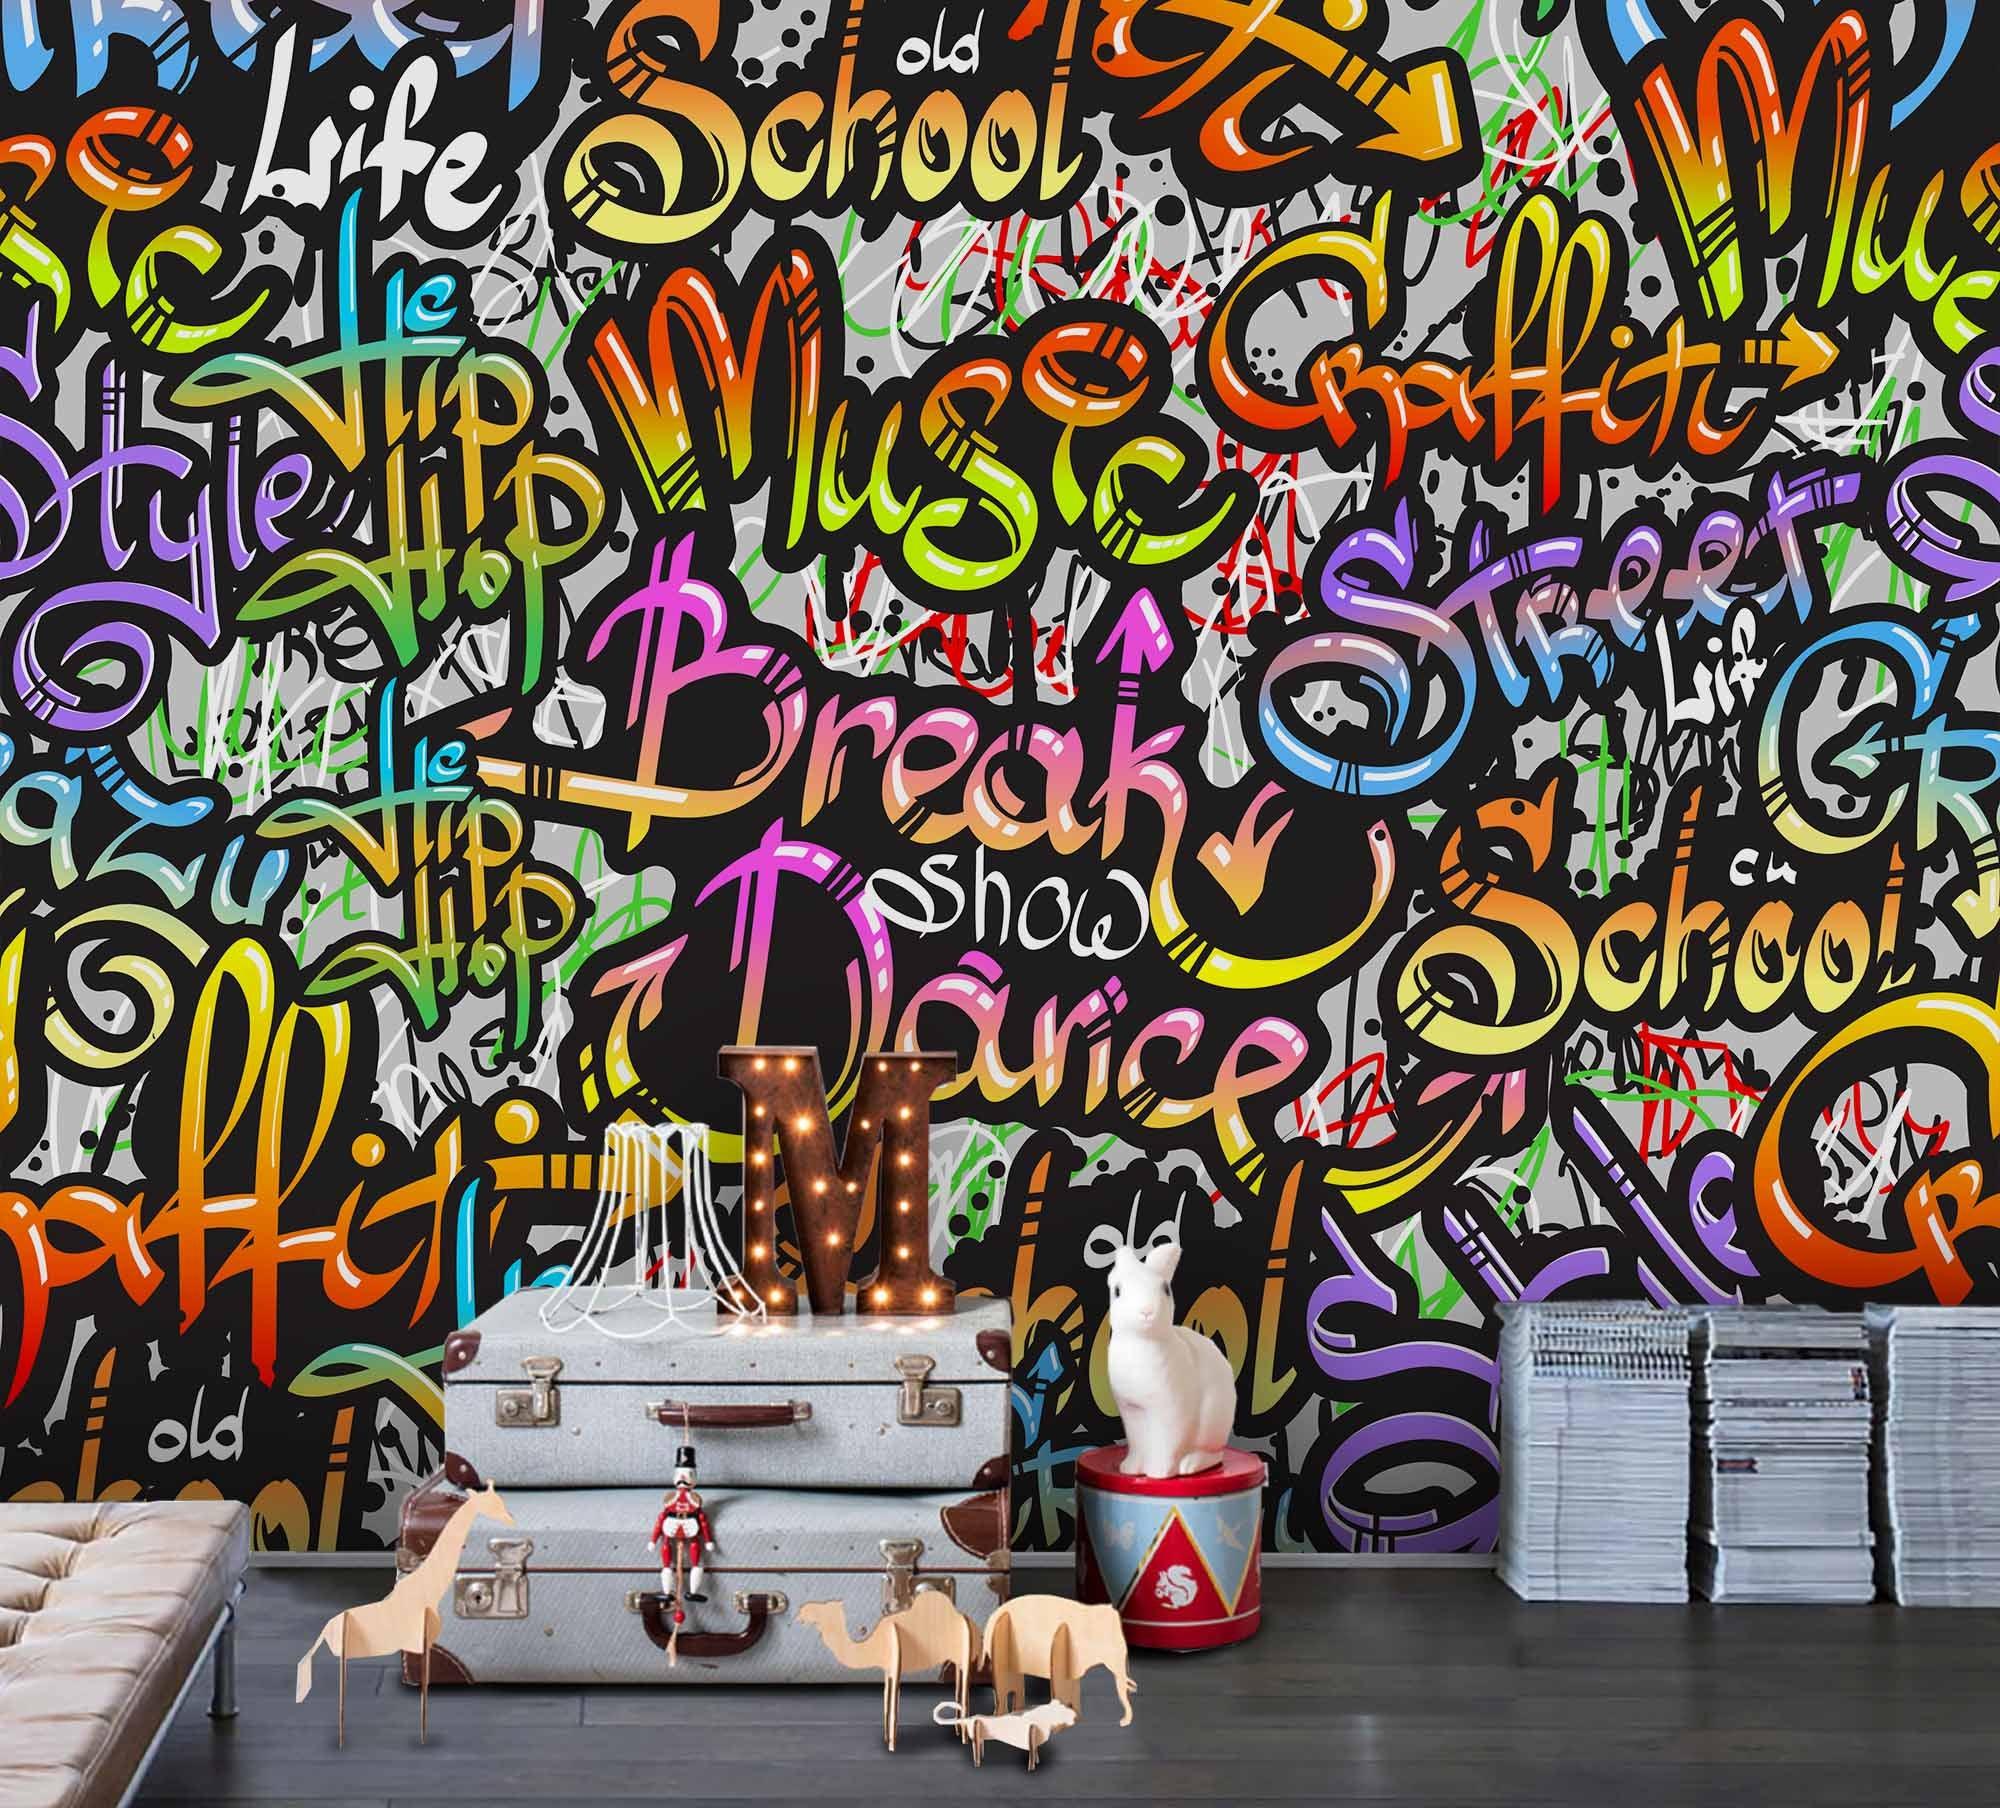 3D Break School Dance Street Graffiti Wall Mural Wallpaper SF89- Jess Art Decoration